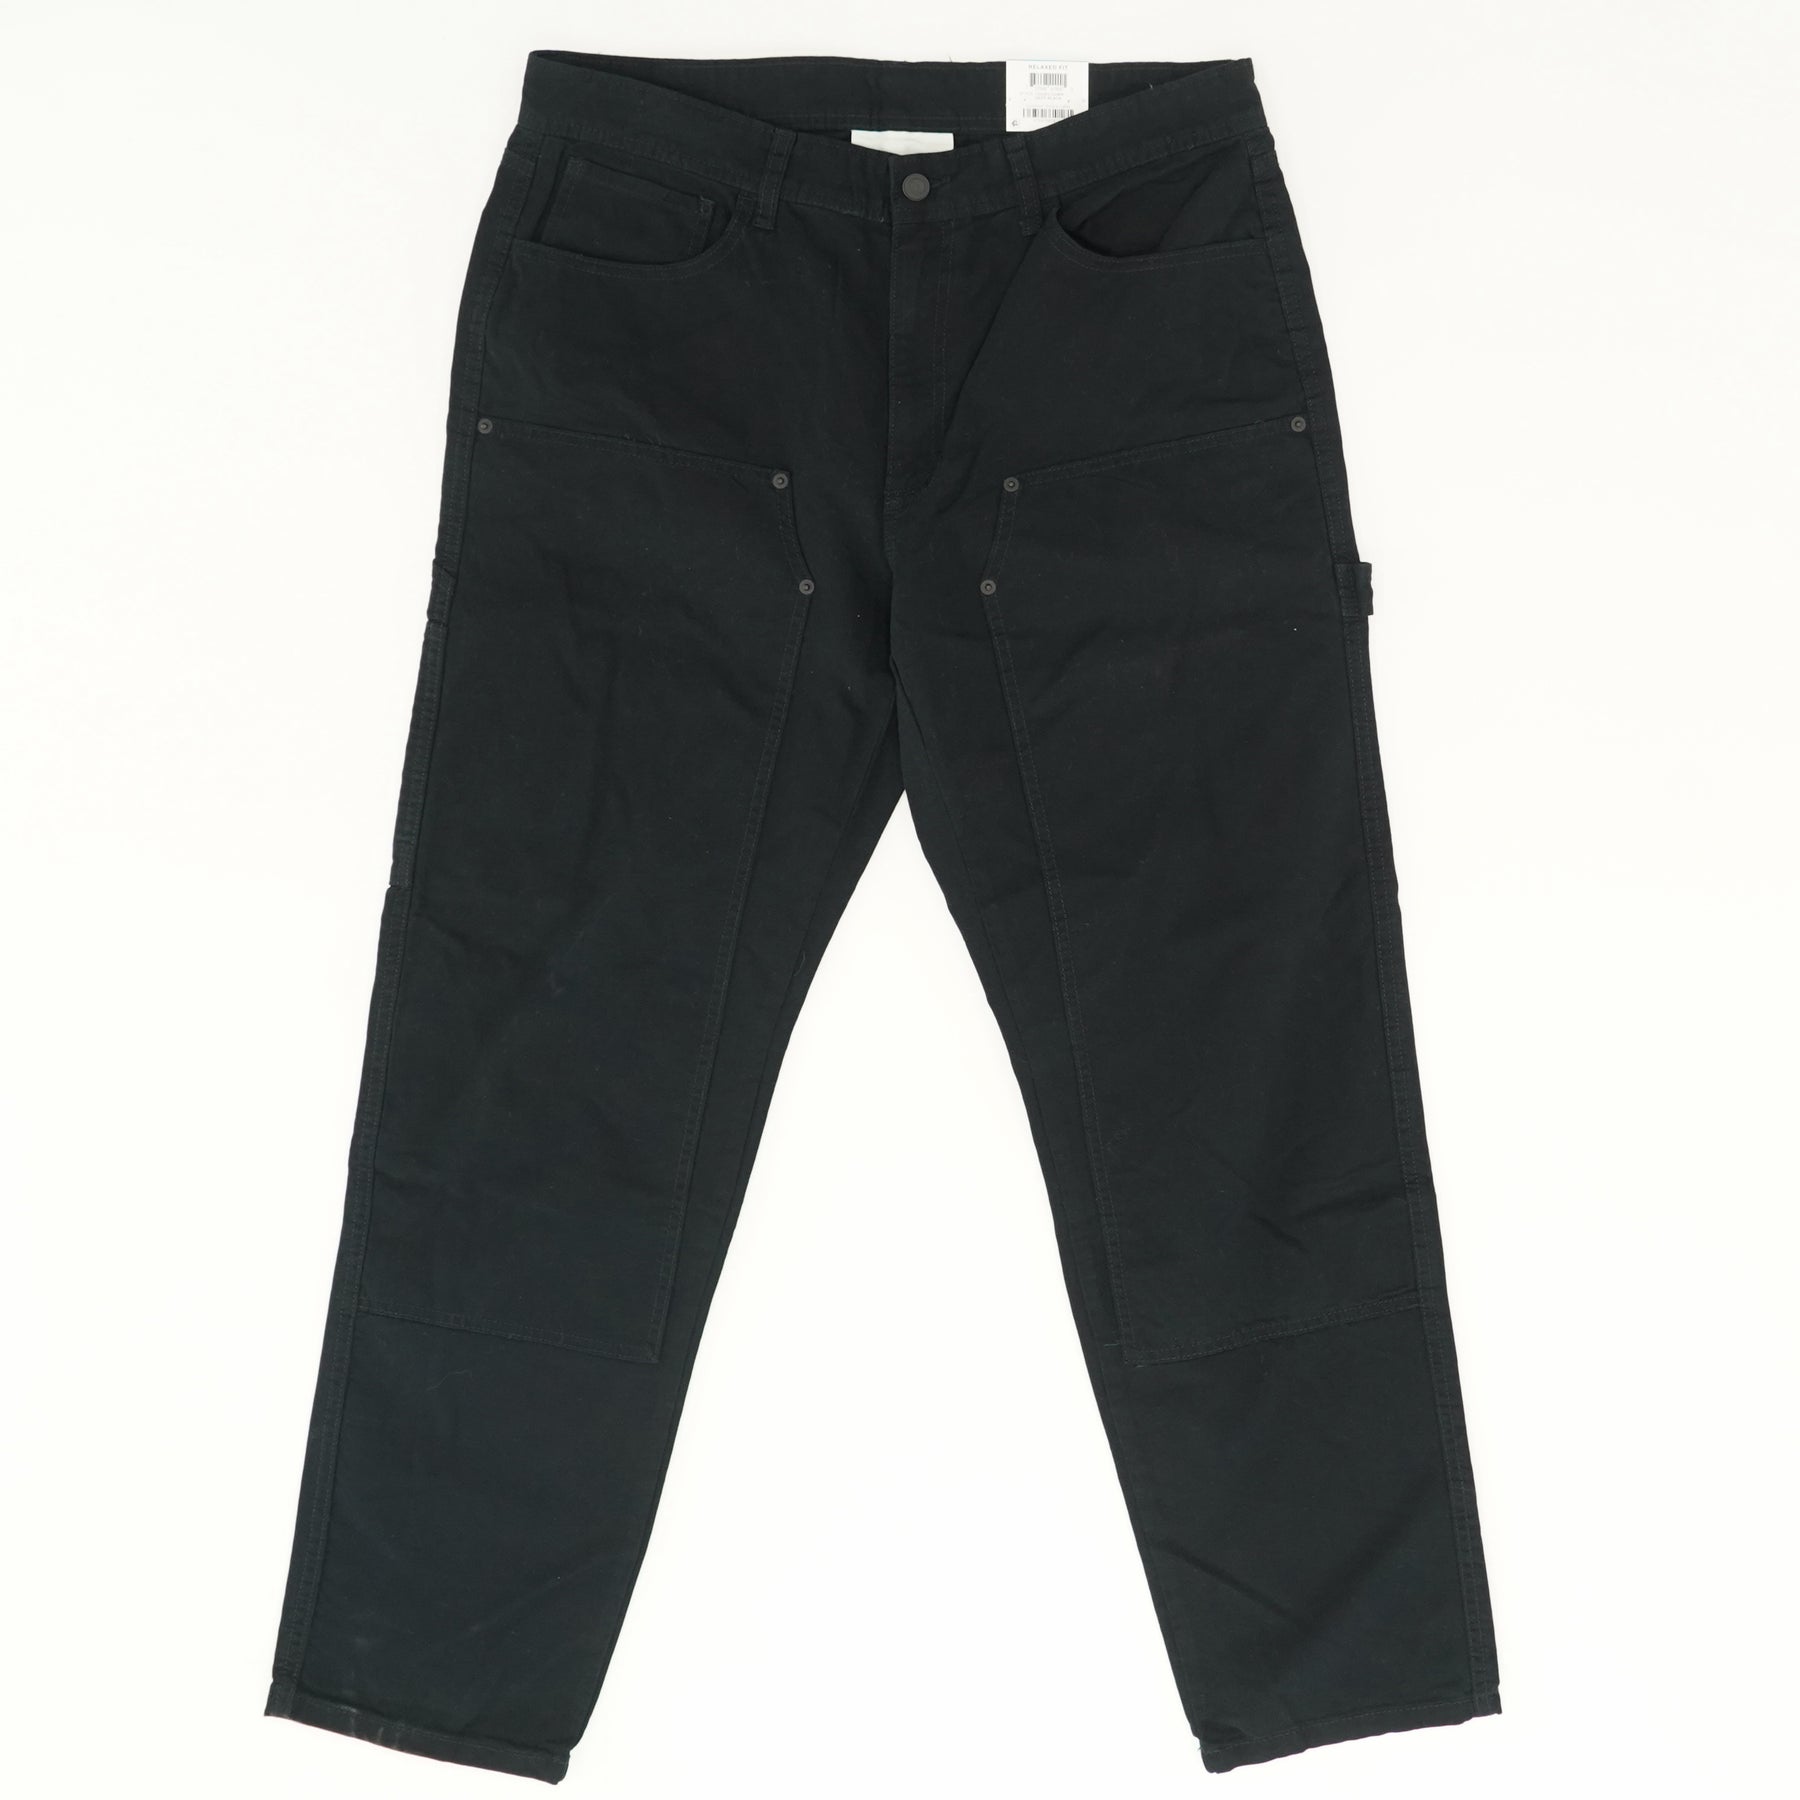 Relaxed Fit Cargo Pants in Deep Black - Size 30W 30L, 32W 30L, 32W 32L ...